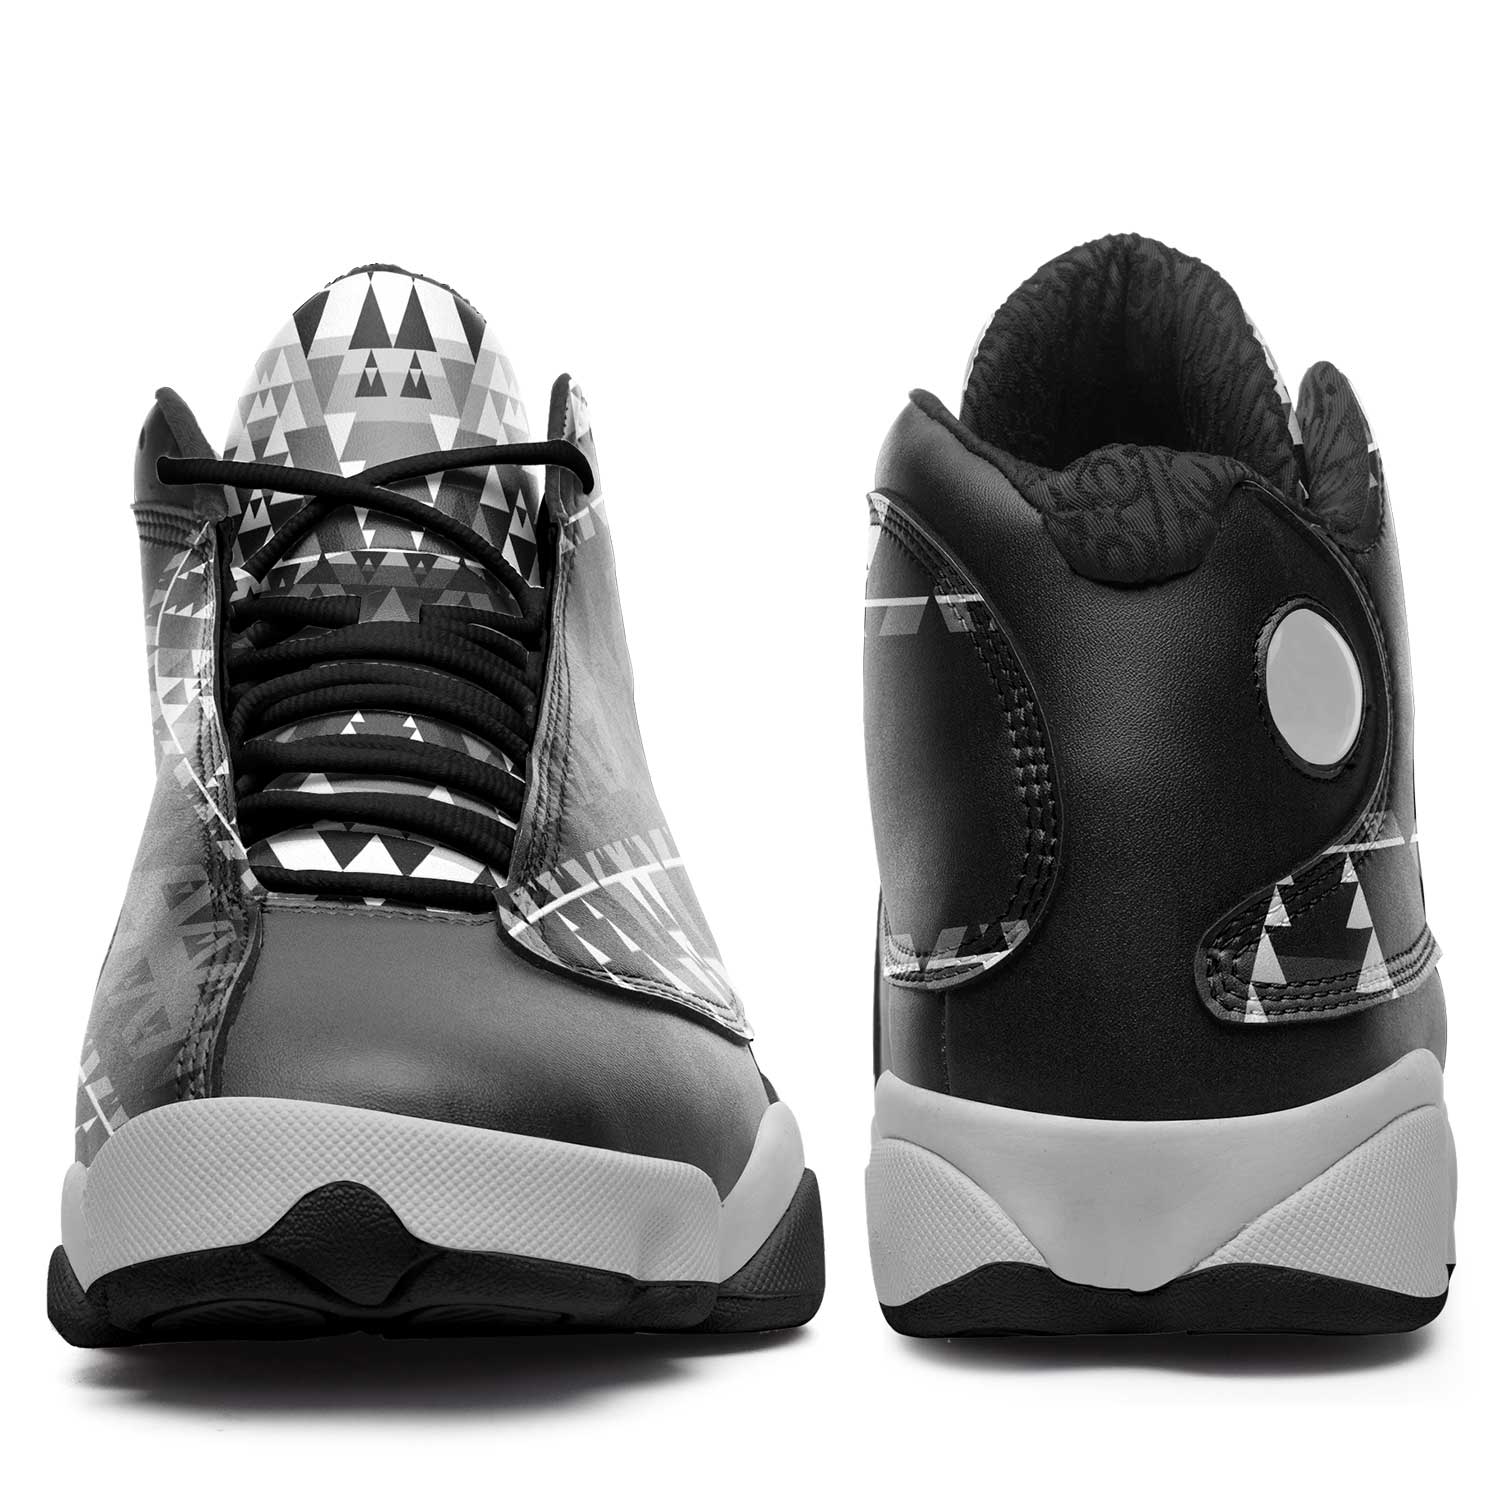 Writing on Stone Black and White Isstsokini Athletic Shoes Herman 